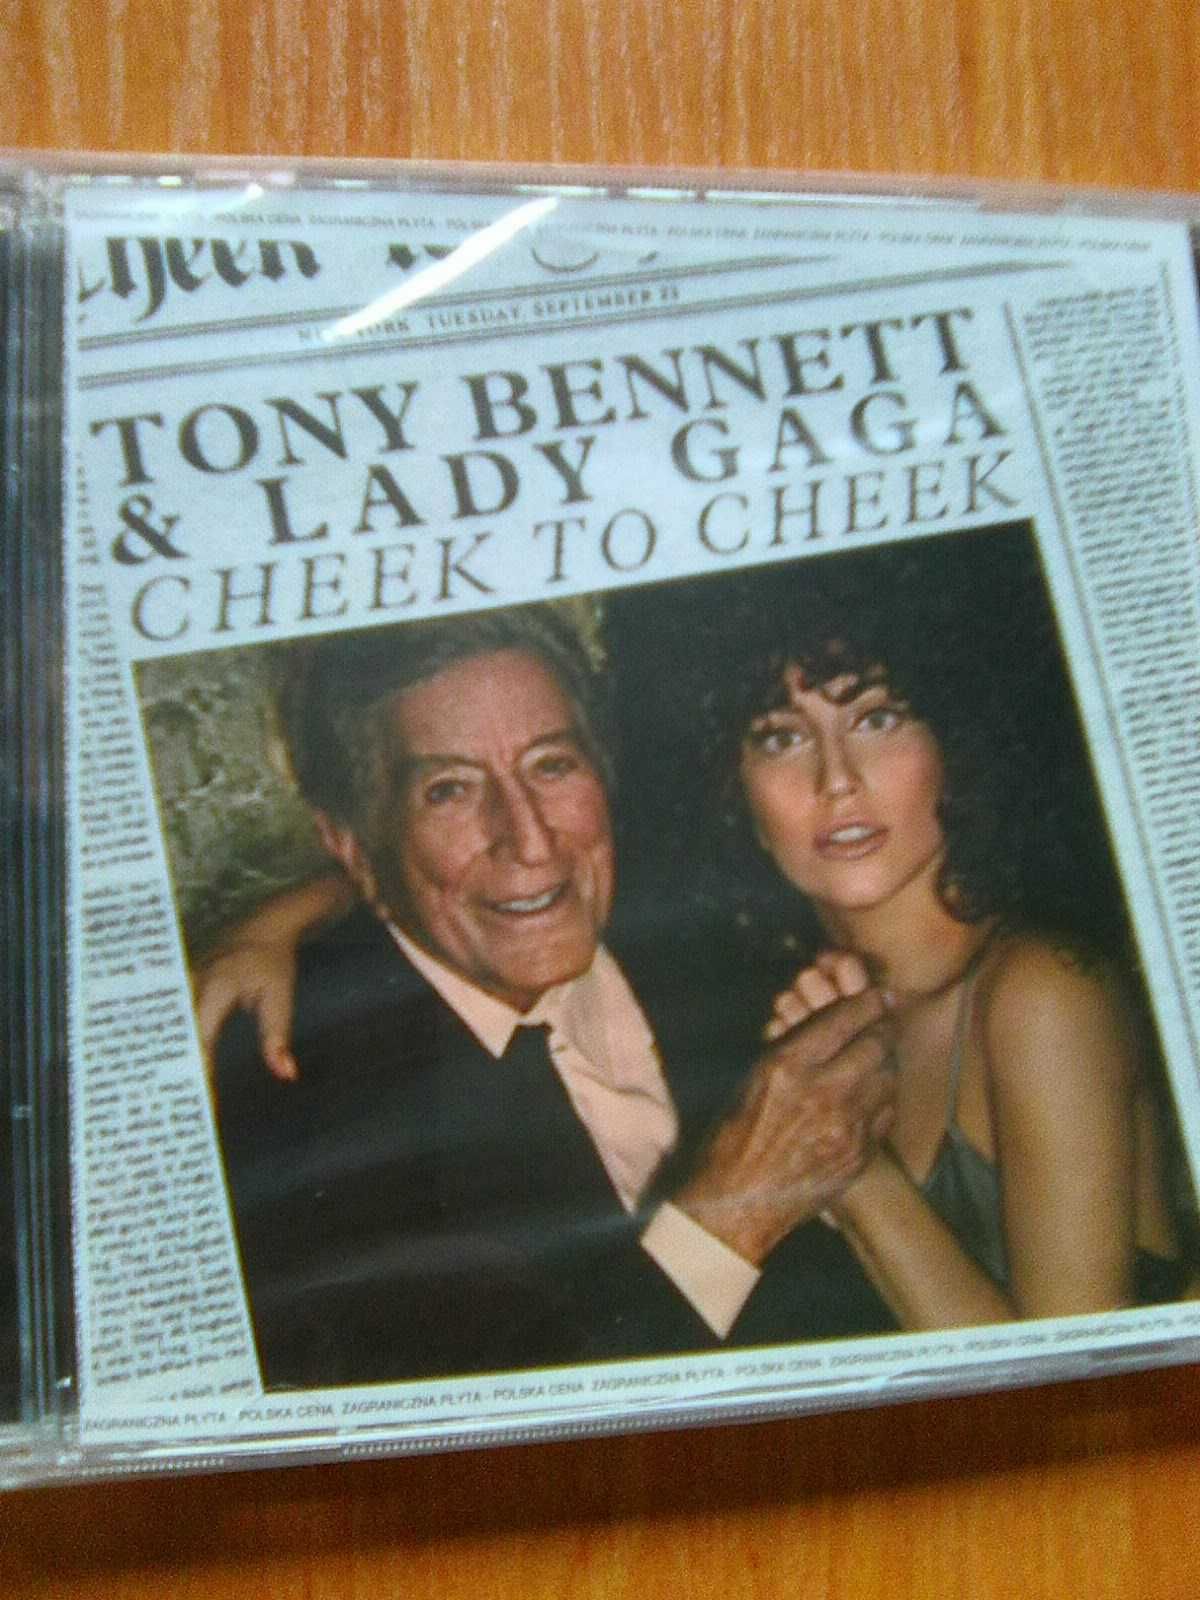 Tony & Lady Gaga Bennett - Cheek To Cheek